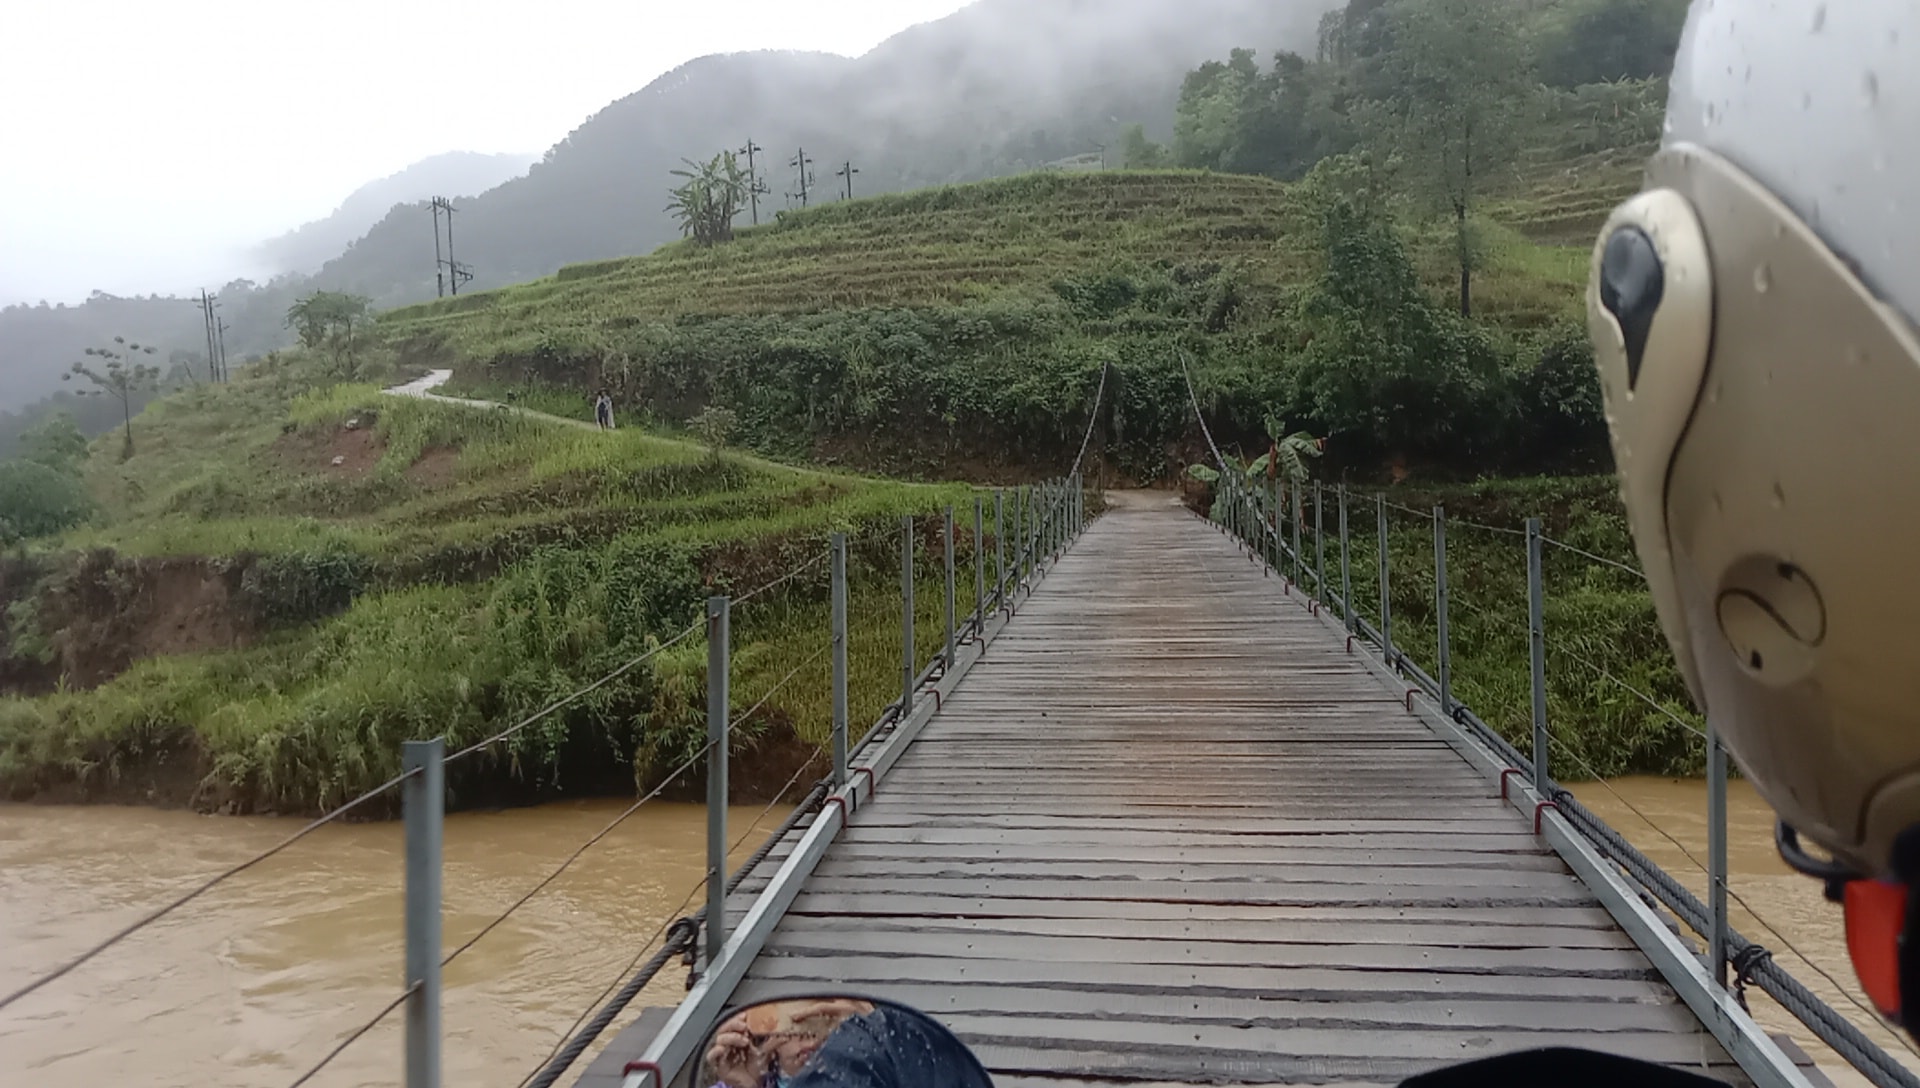 The bridge in the road in Hoang Su Phi